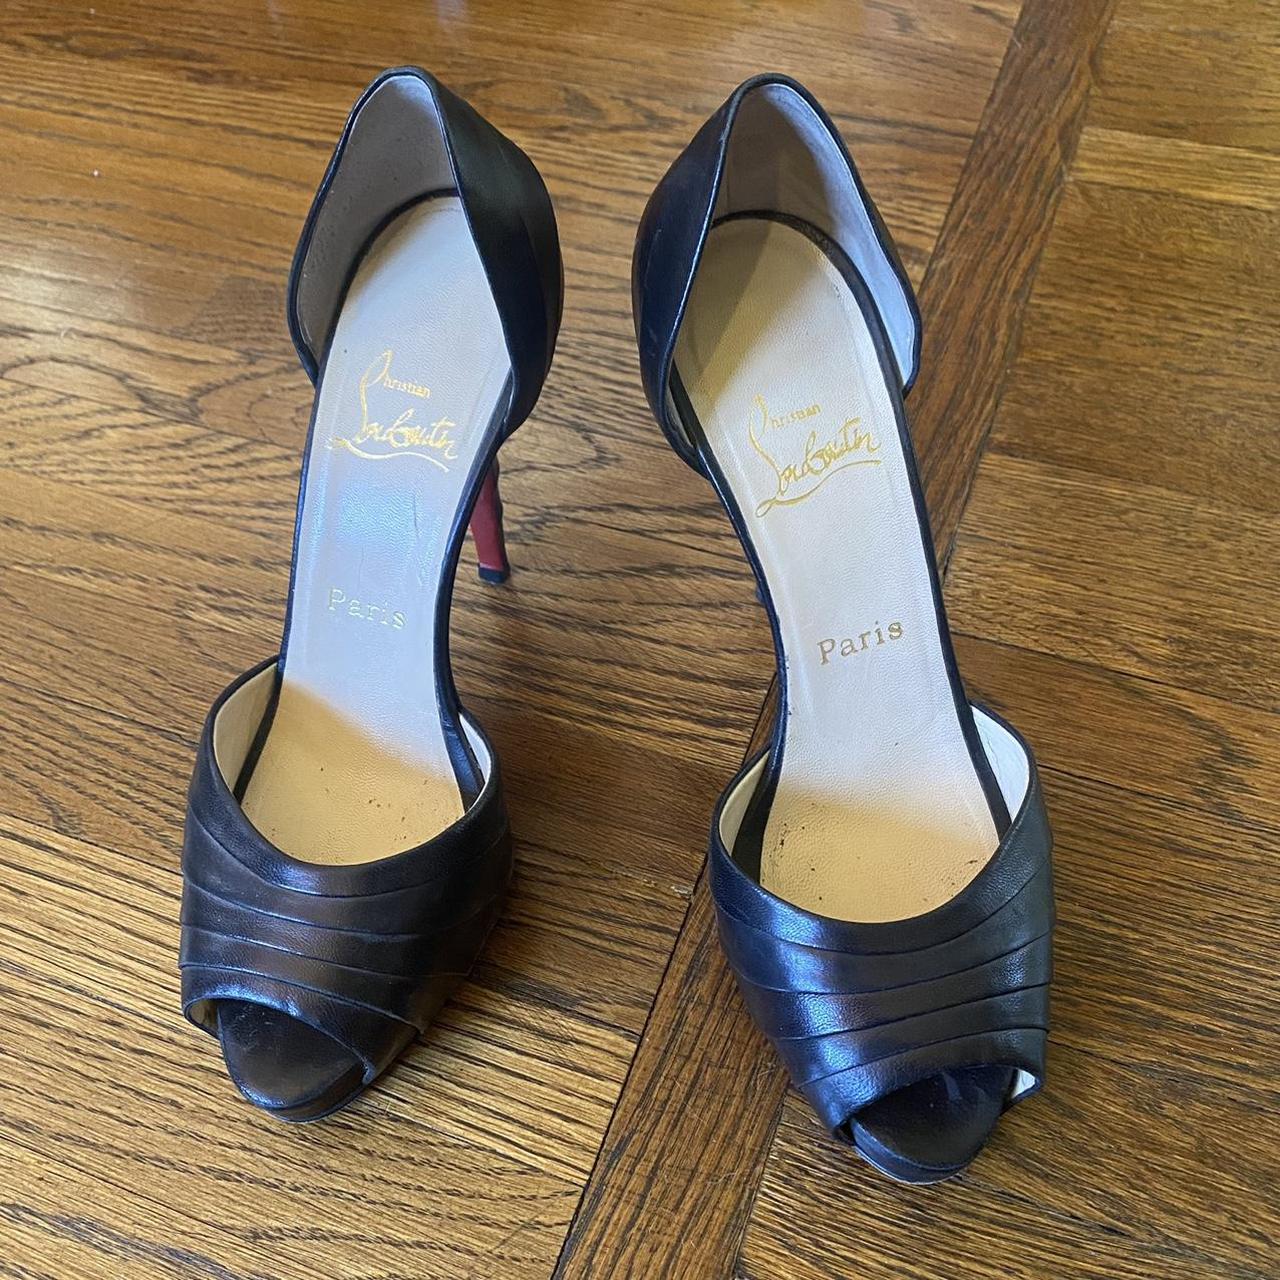 Christian Louboutin classy black heels Peep toe - Depop